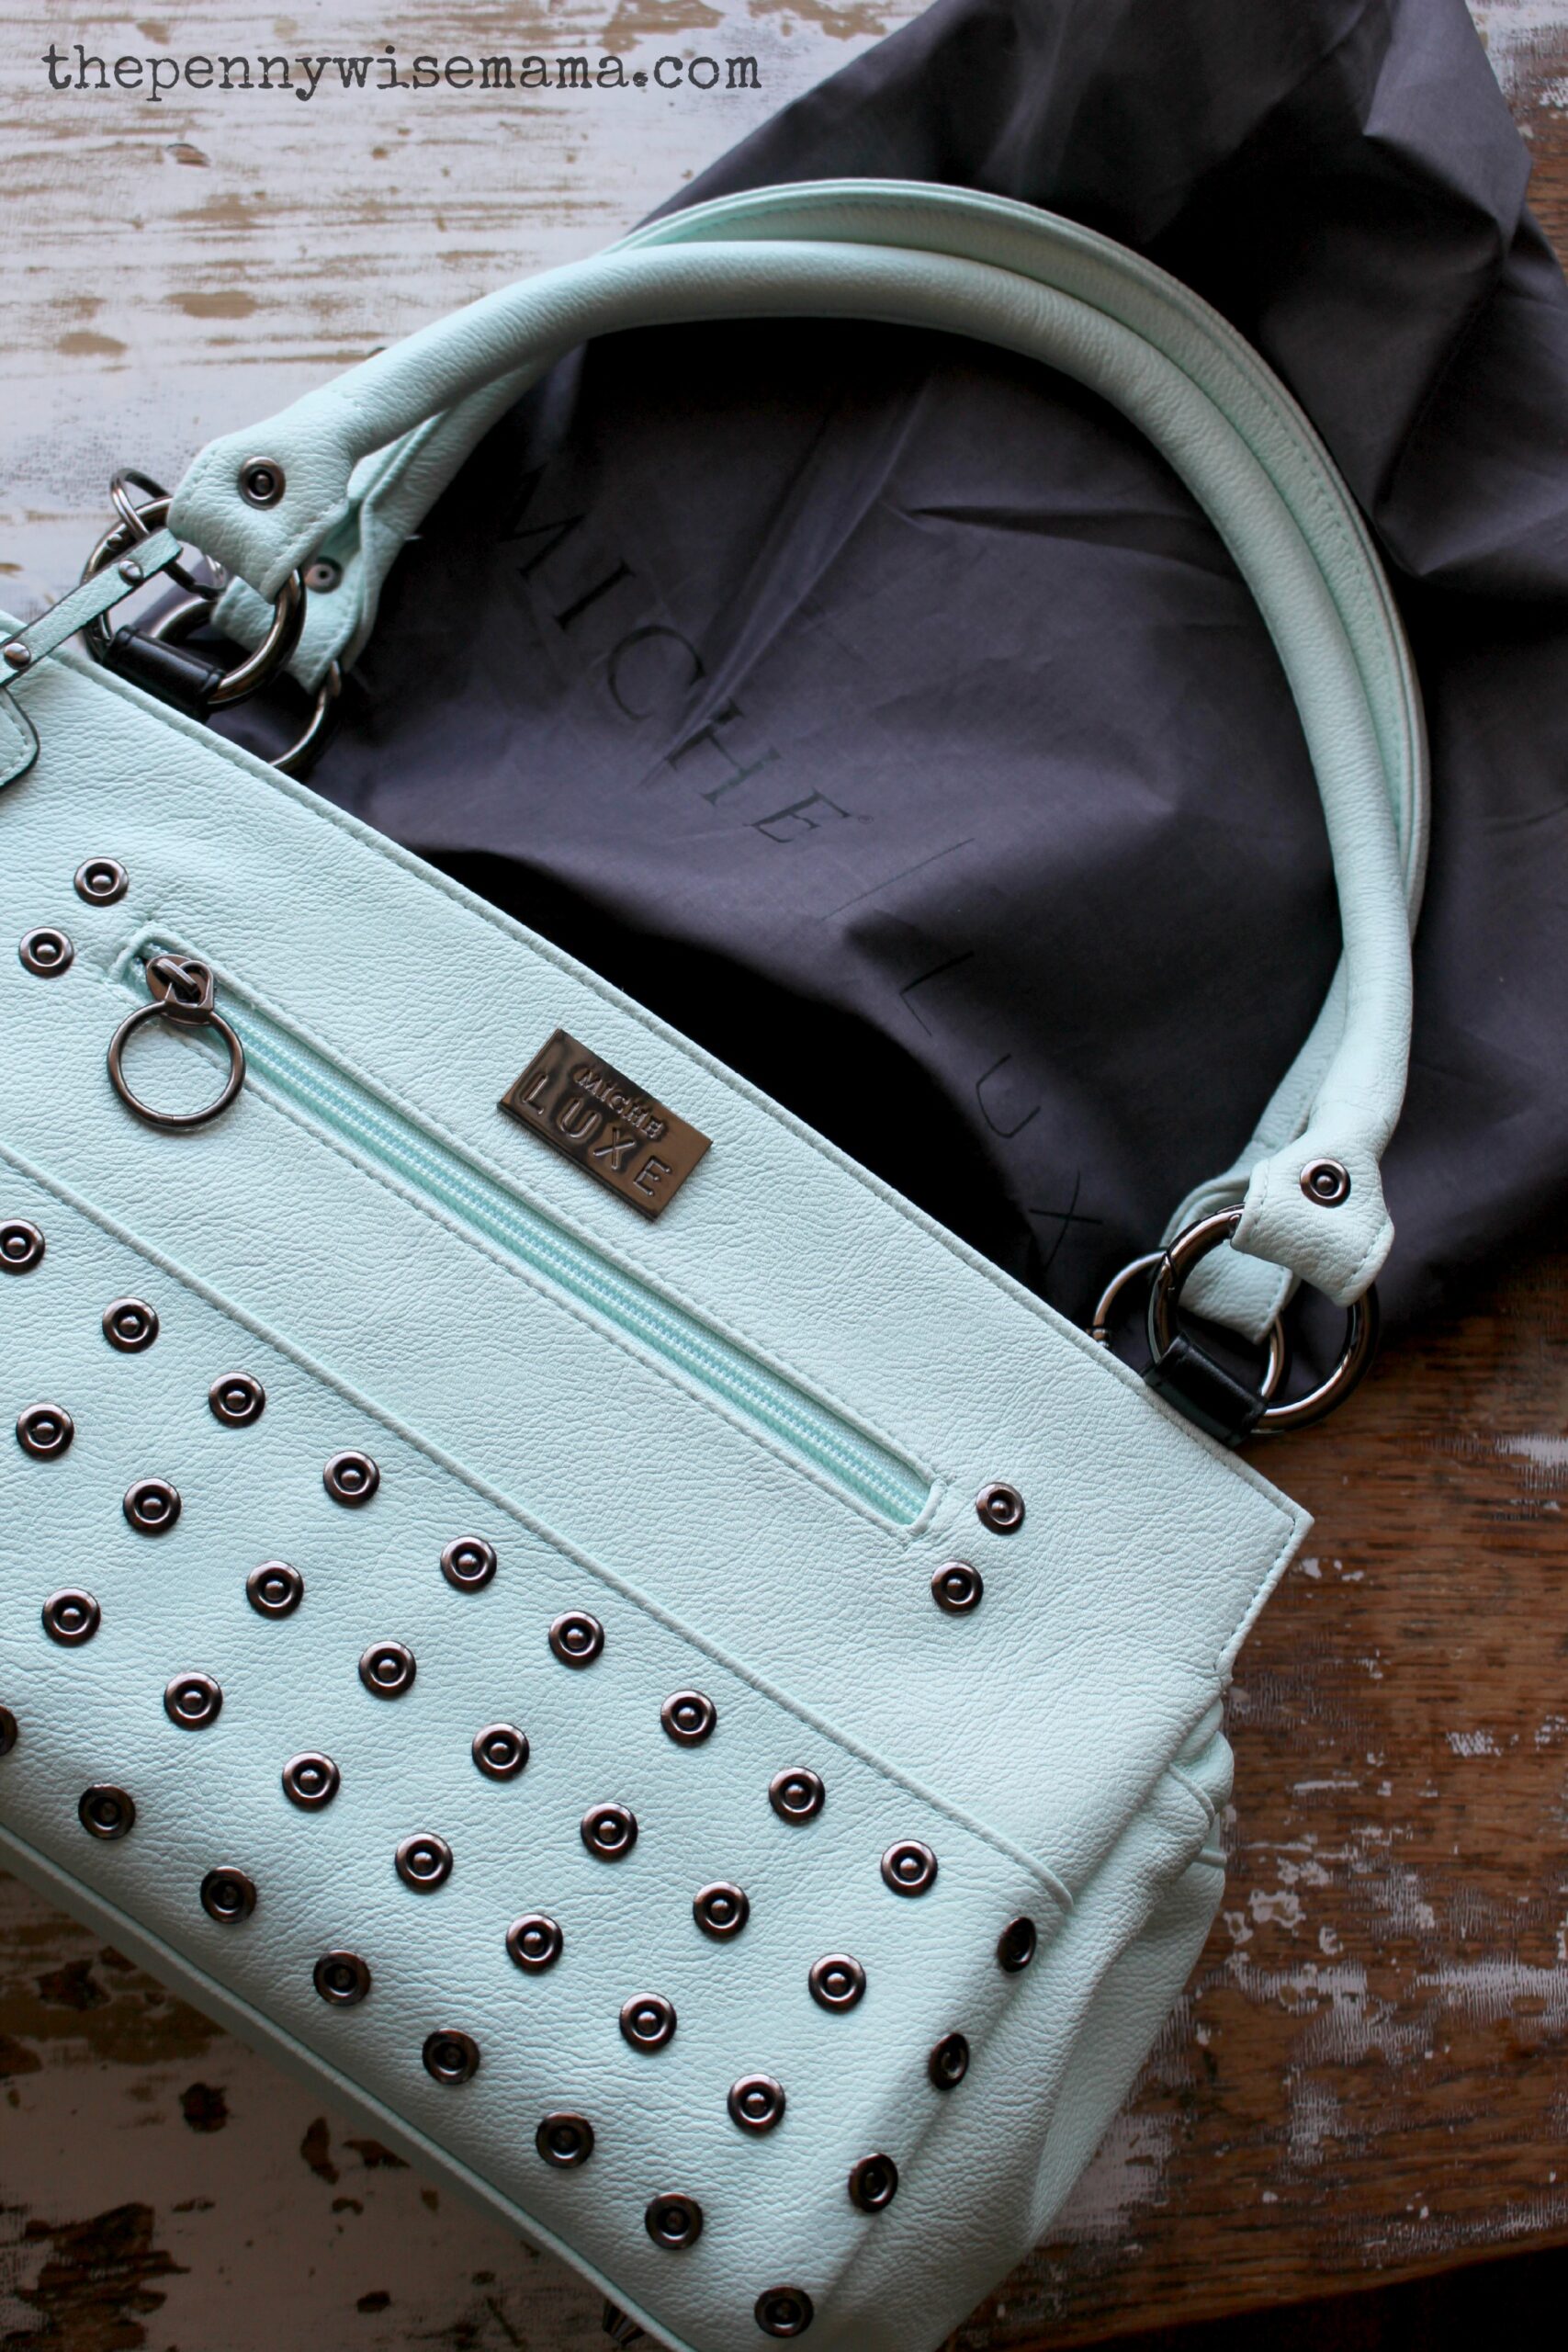 Authentic Womens Miche Luxe Leather Handbag Purse